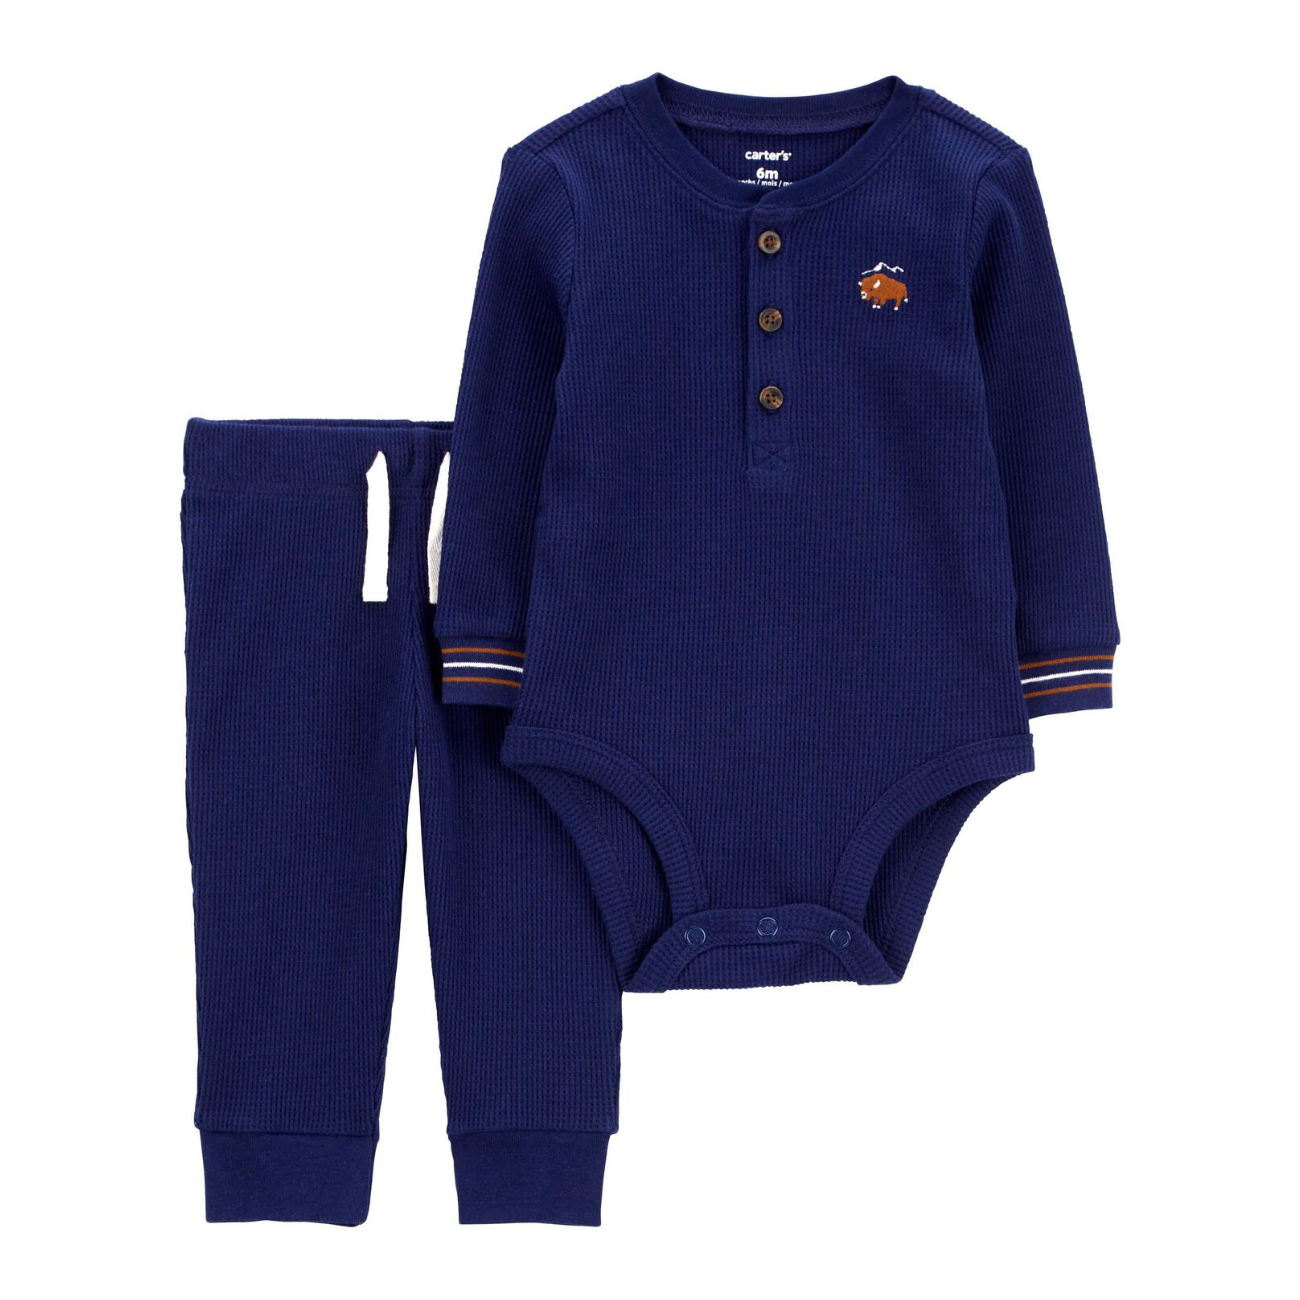 Carters Baby Conjunto body manga larga y pantalón azul